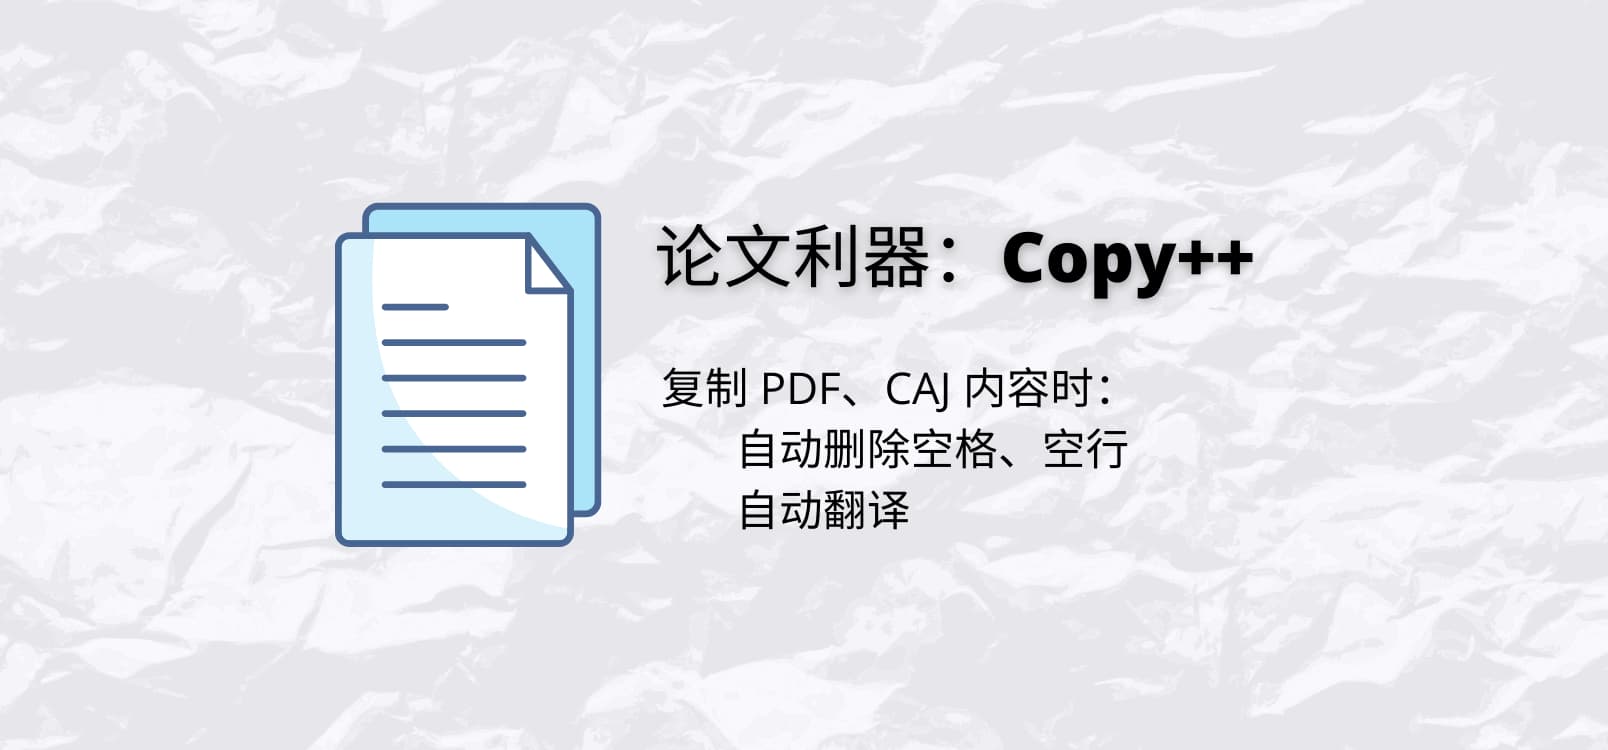 Copy++ 复制 PDF、CAJ 内容时,自动删除空格、空行，以及自动翻译[Win]